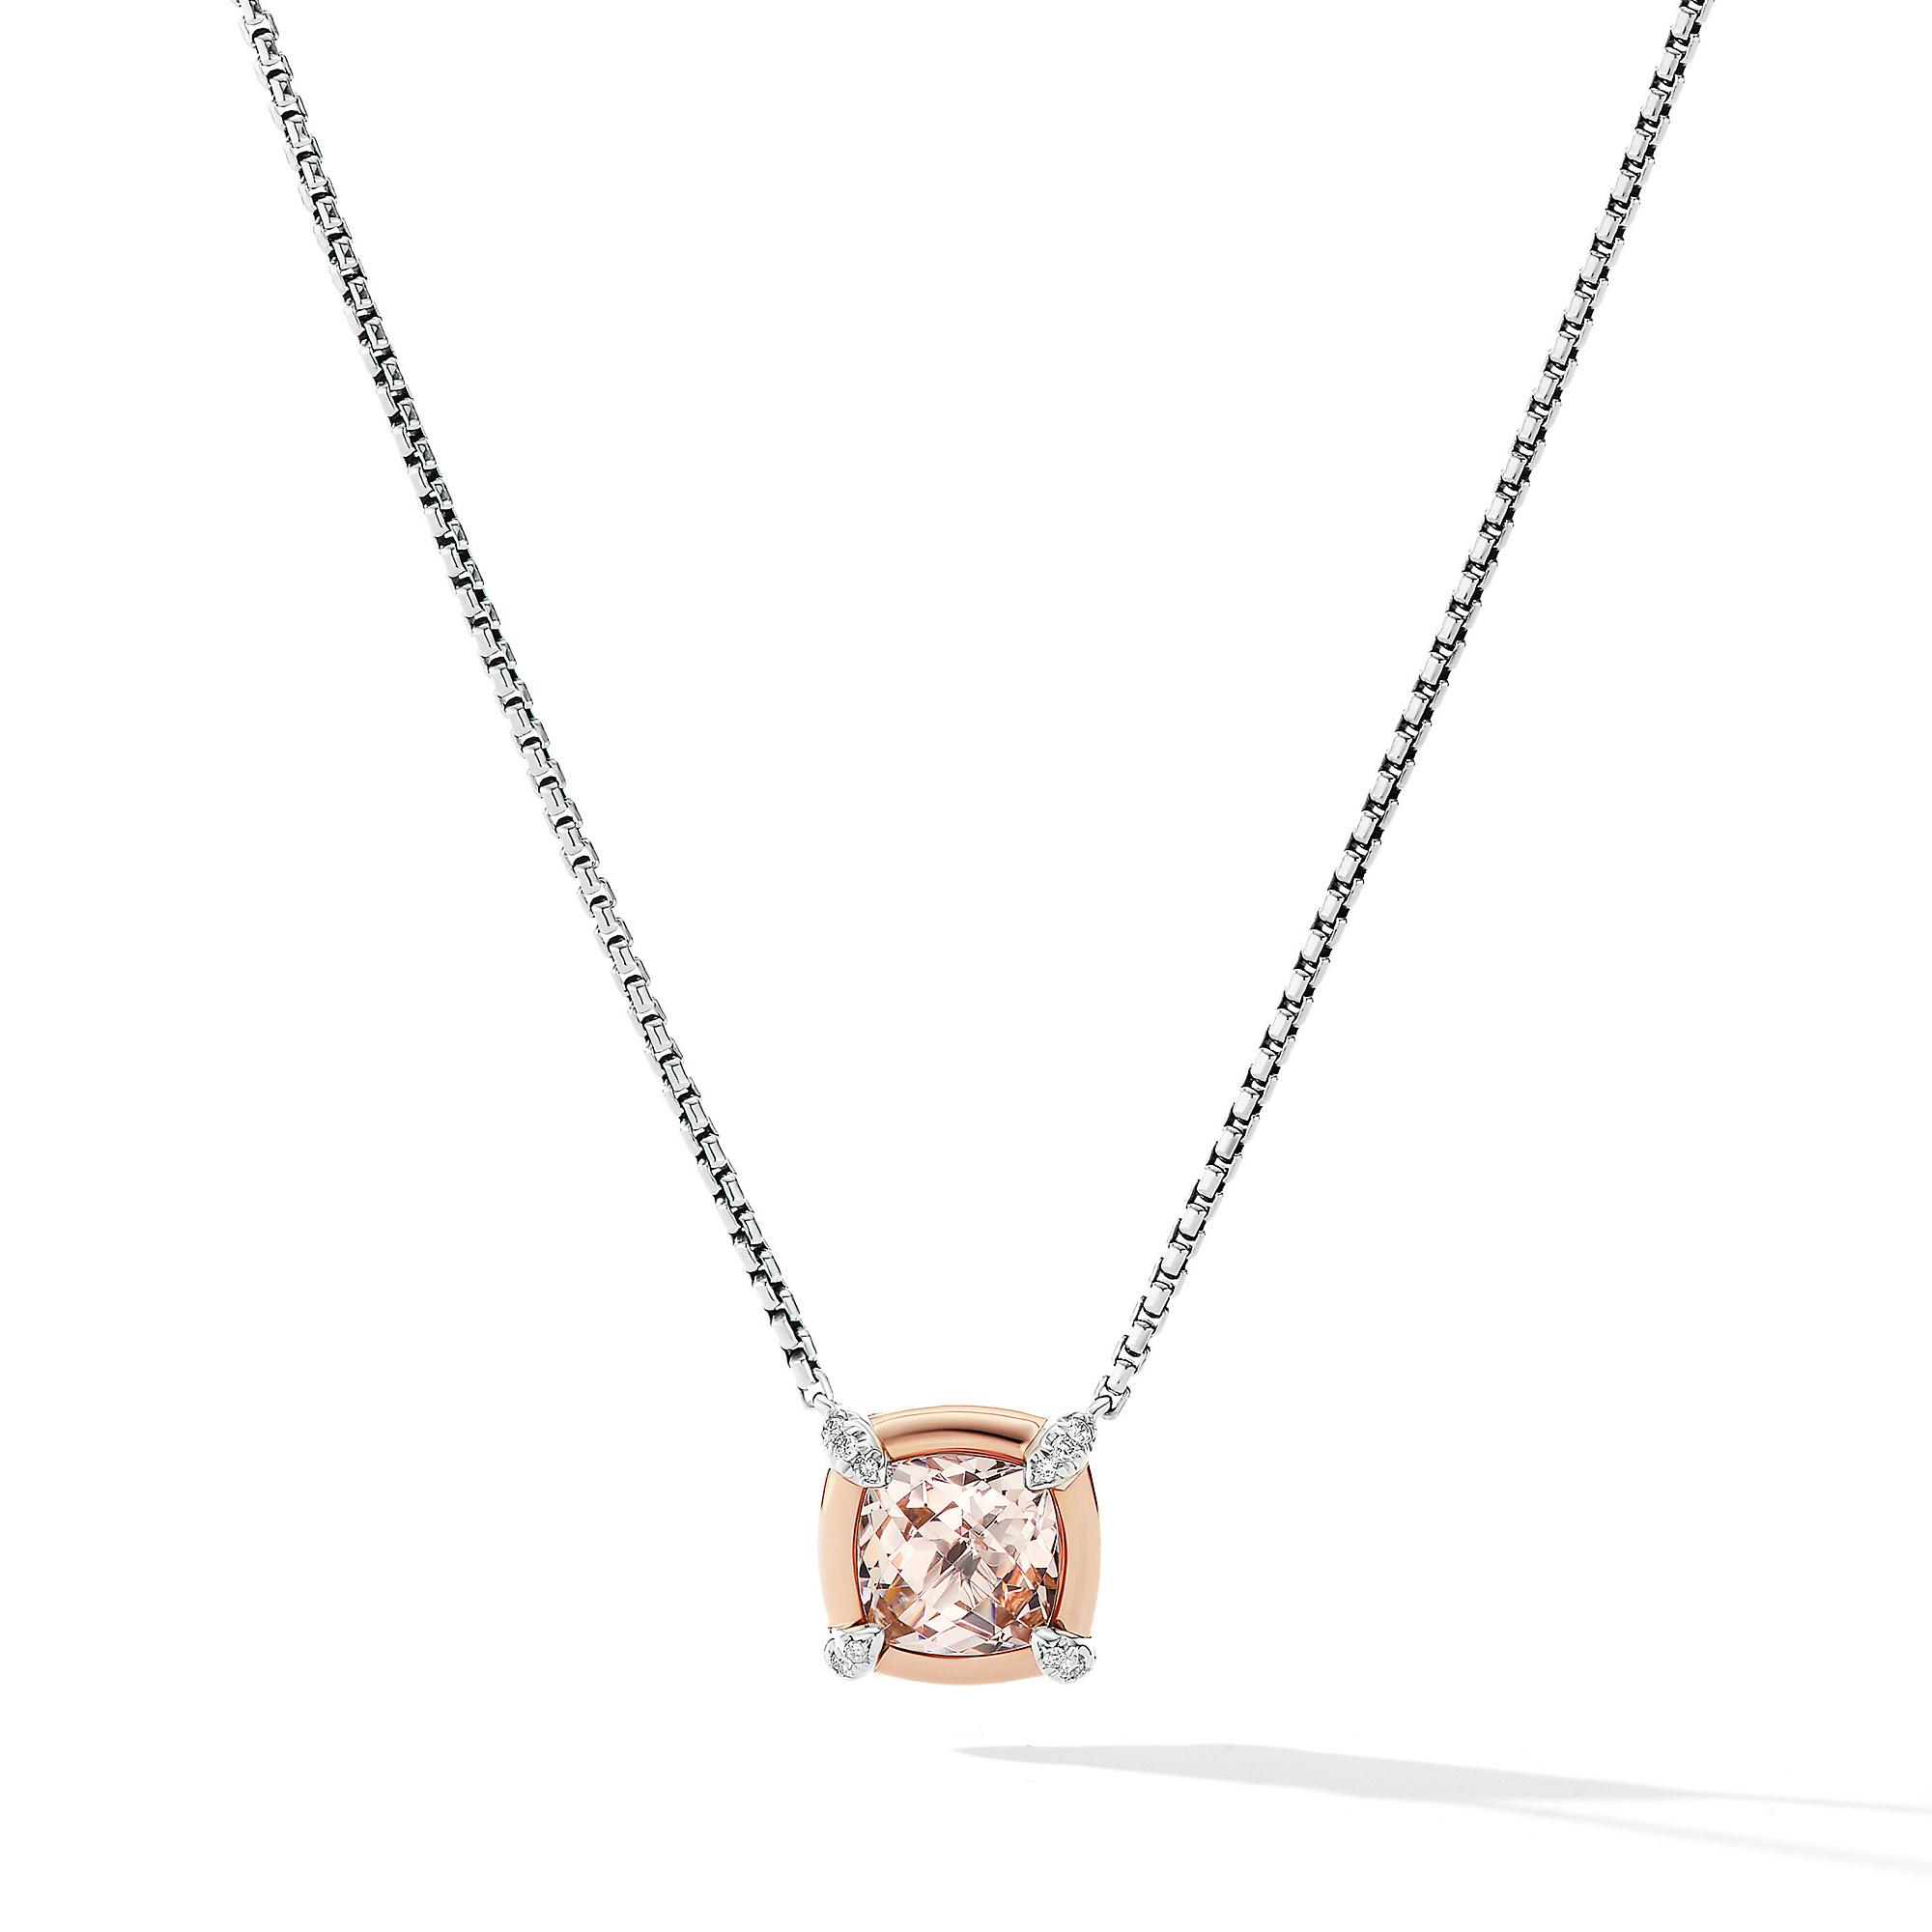 David Yurman Petite Chatelaine  Pendant Necklace with Morganite, 18k Rose Gold Bezel and Pave Diamonds